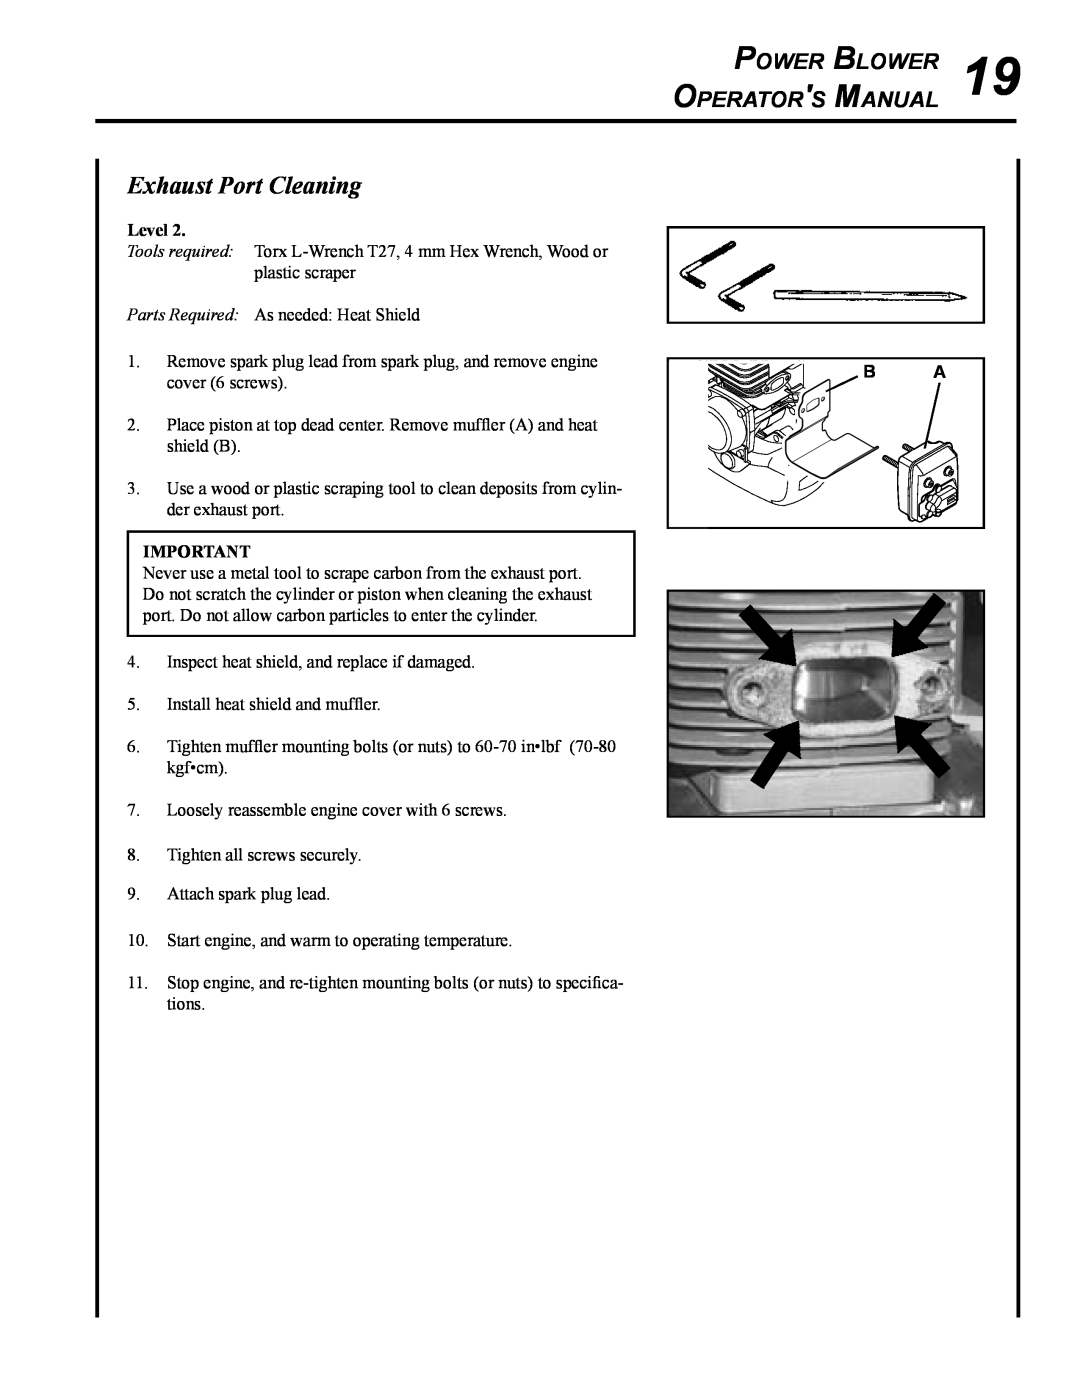 Echo PB-250 manual Exhaust Port Cleaning, Power Blower 19 Operators Manual 